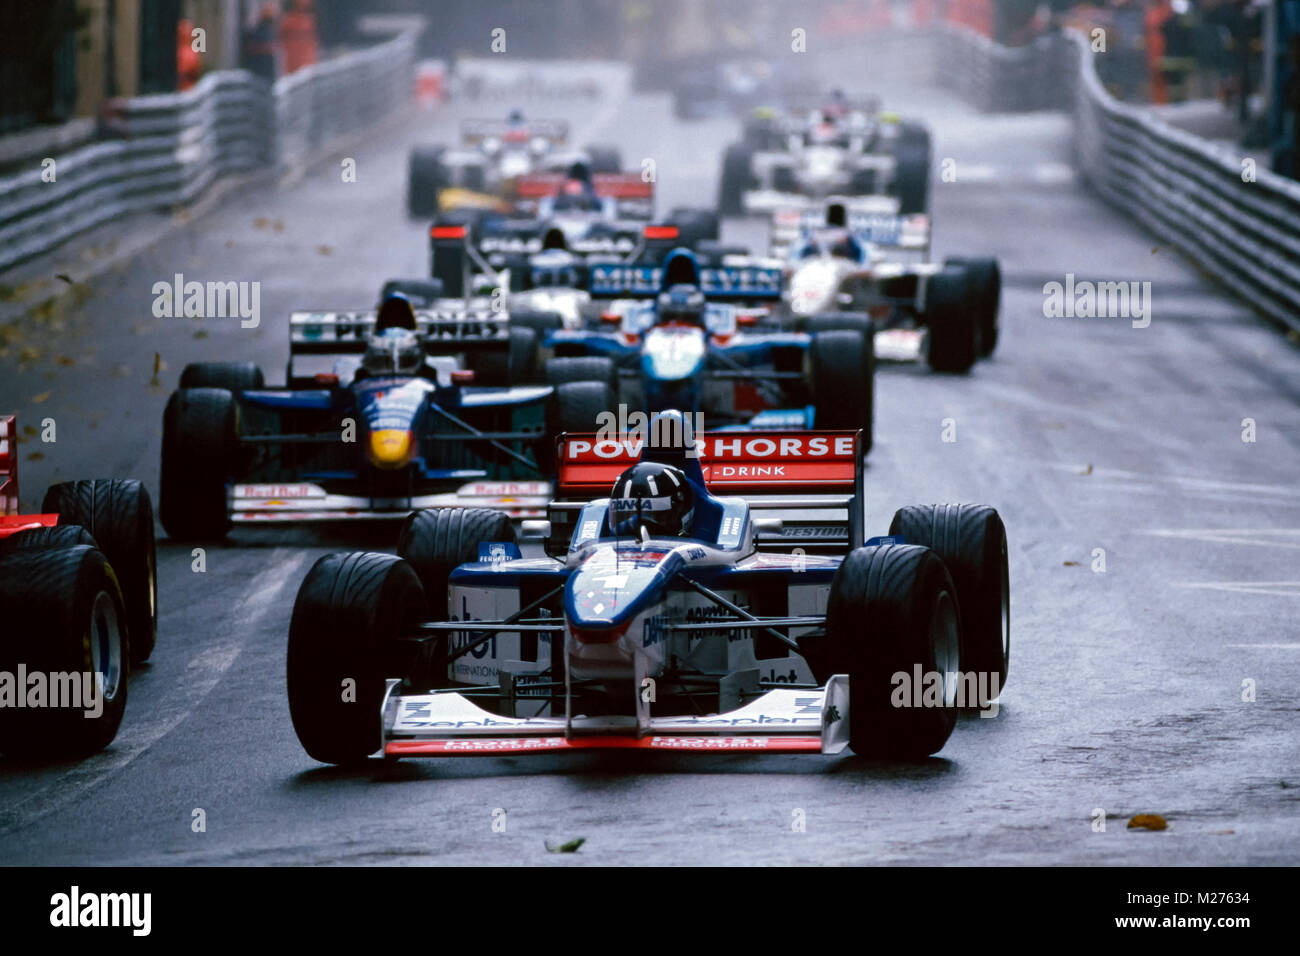 F1, Damon Hill,Arrows, Monaco GP 1997 Stock Photo